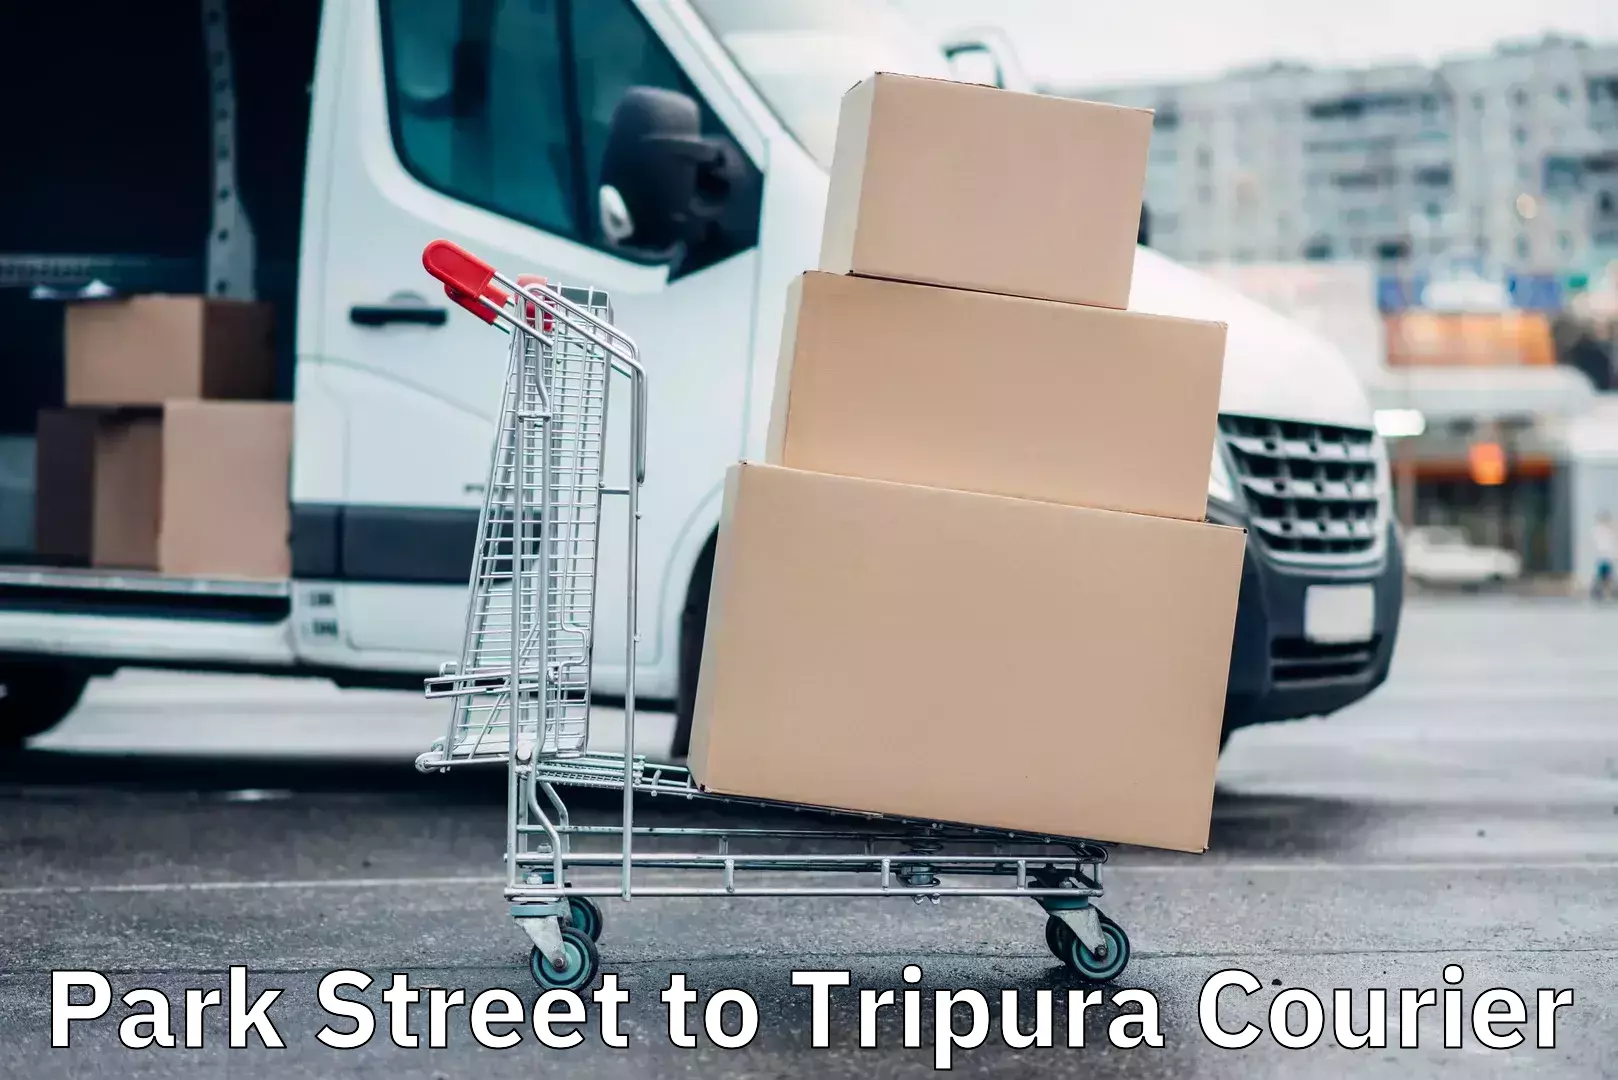 Delivery service partnership Park Street to Tripura